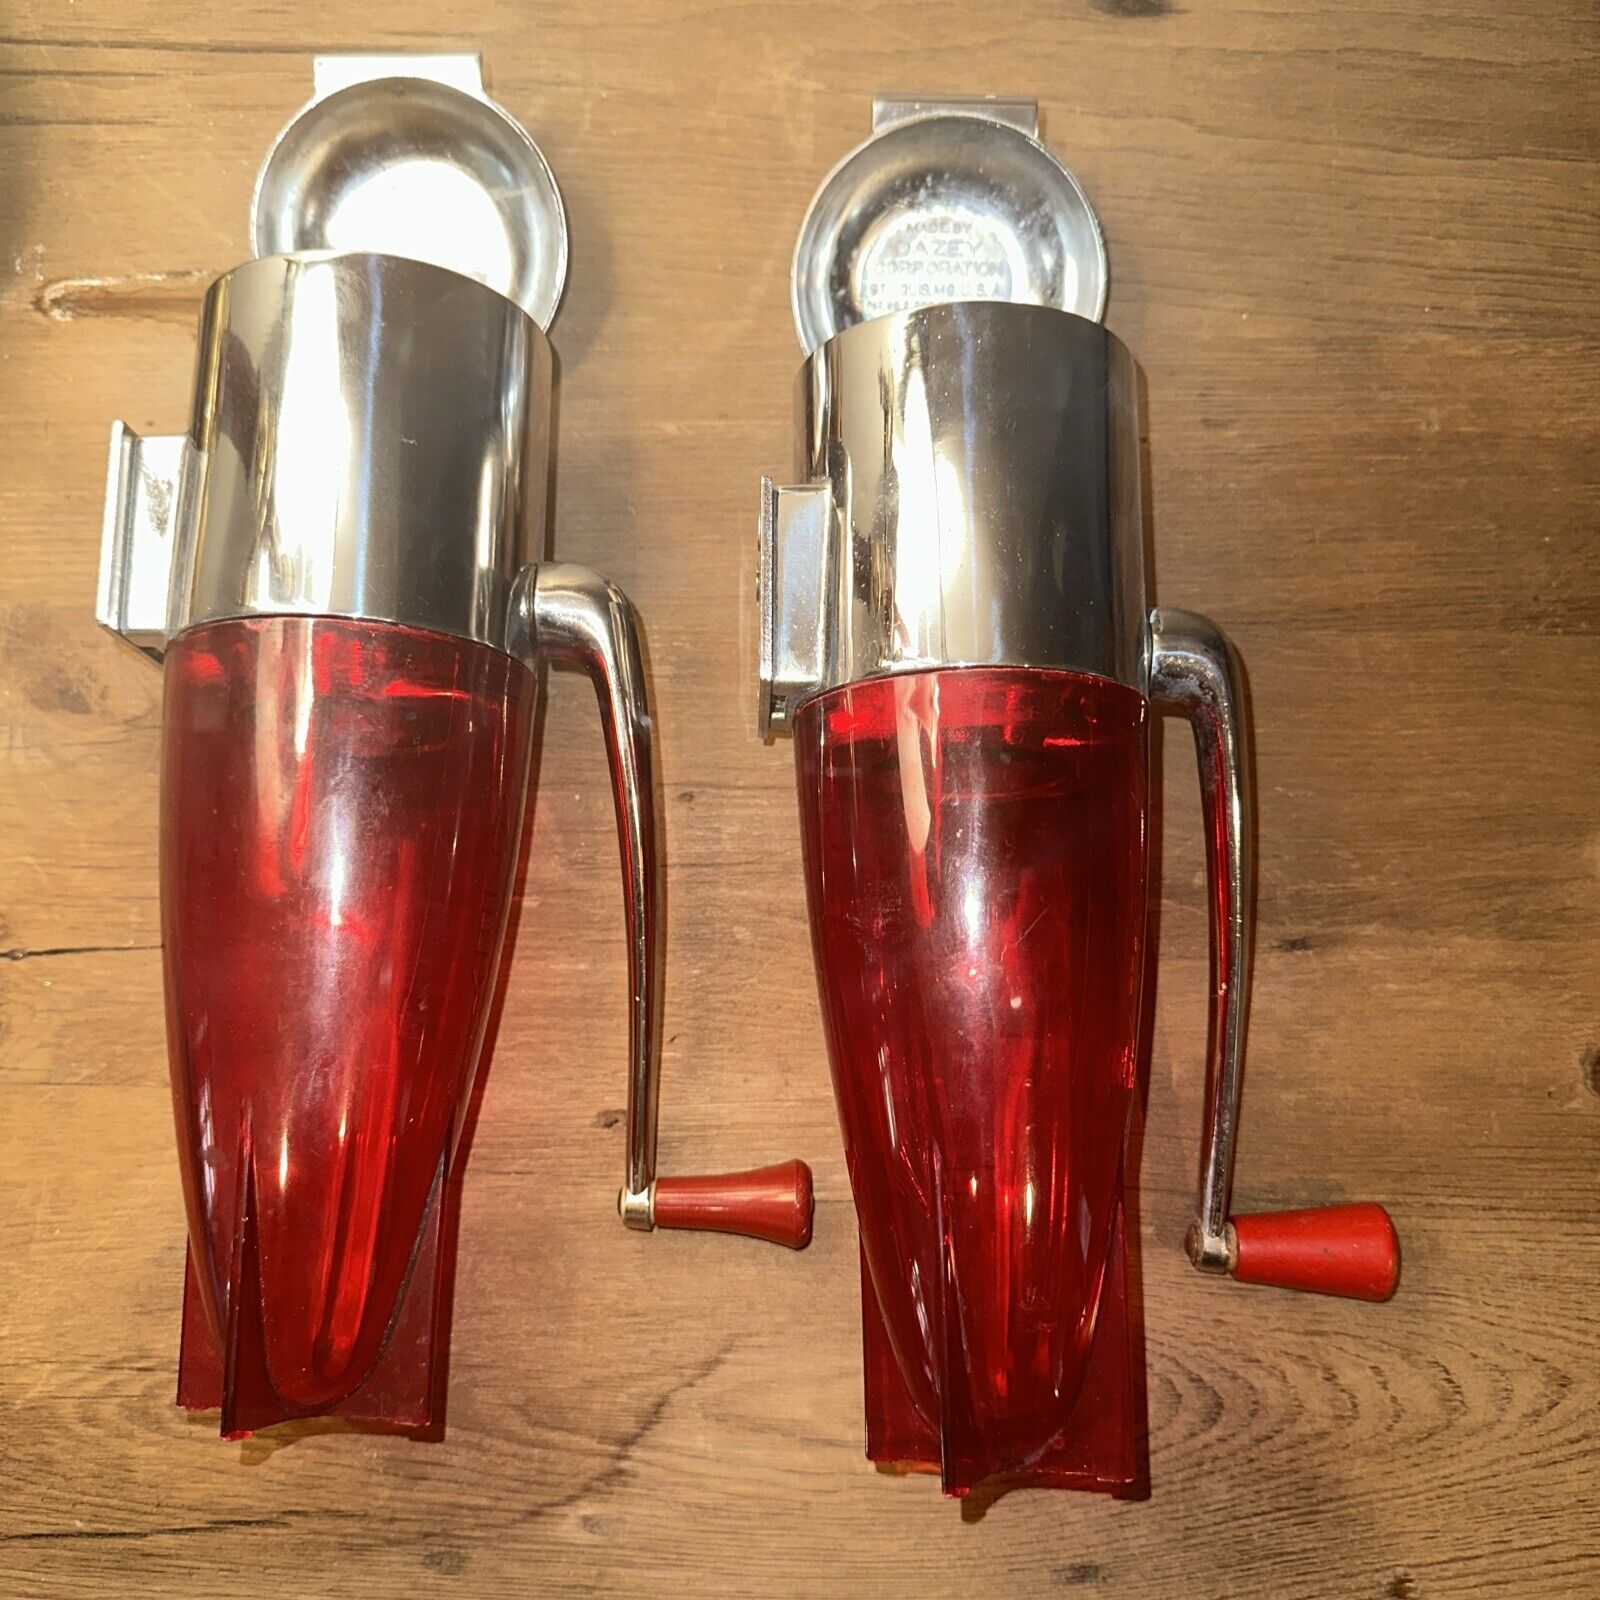 Dazey Rocket Ice Crusher Model 160 Red/Chrome Crank 1950's Set Of 2